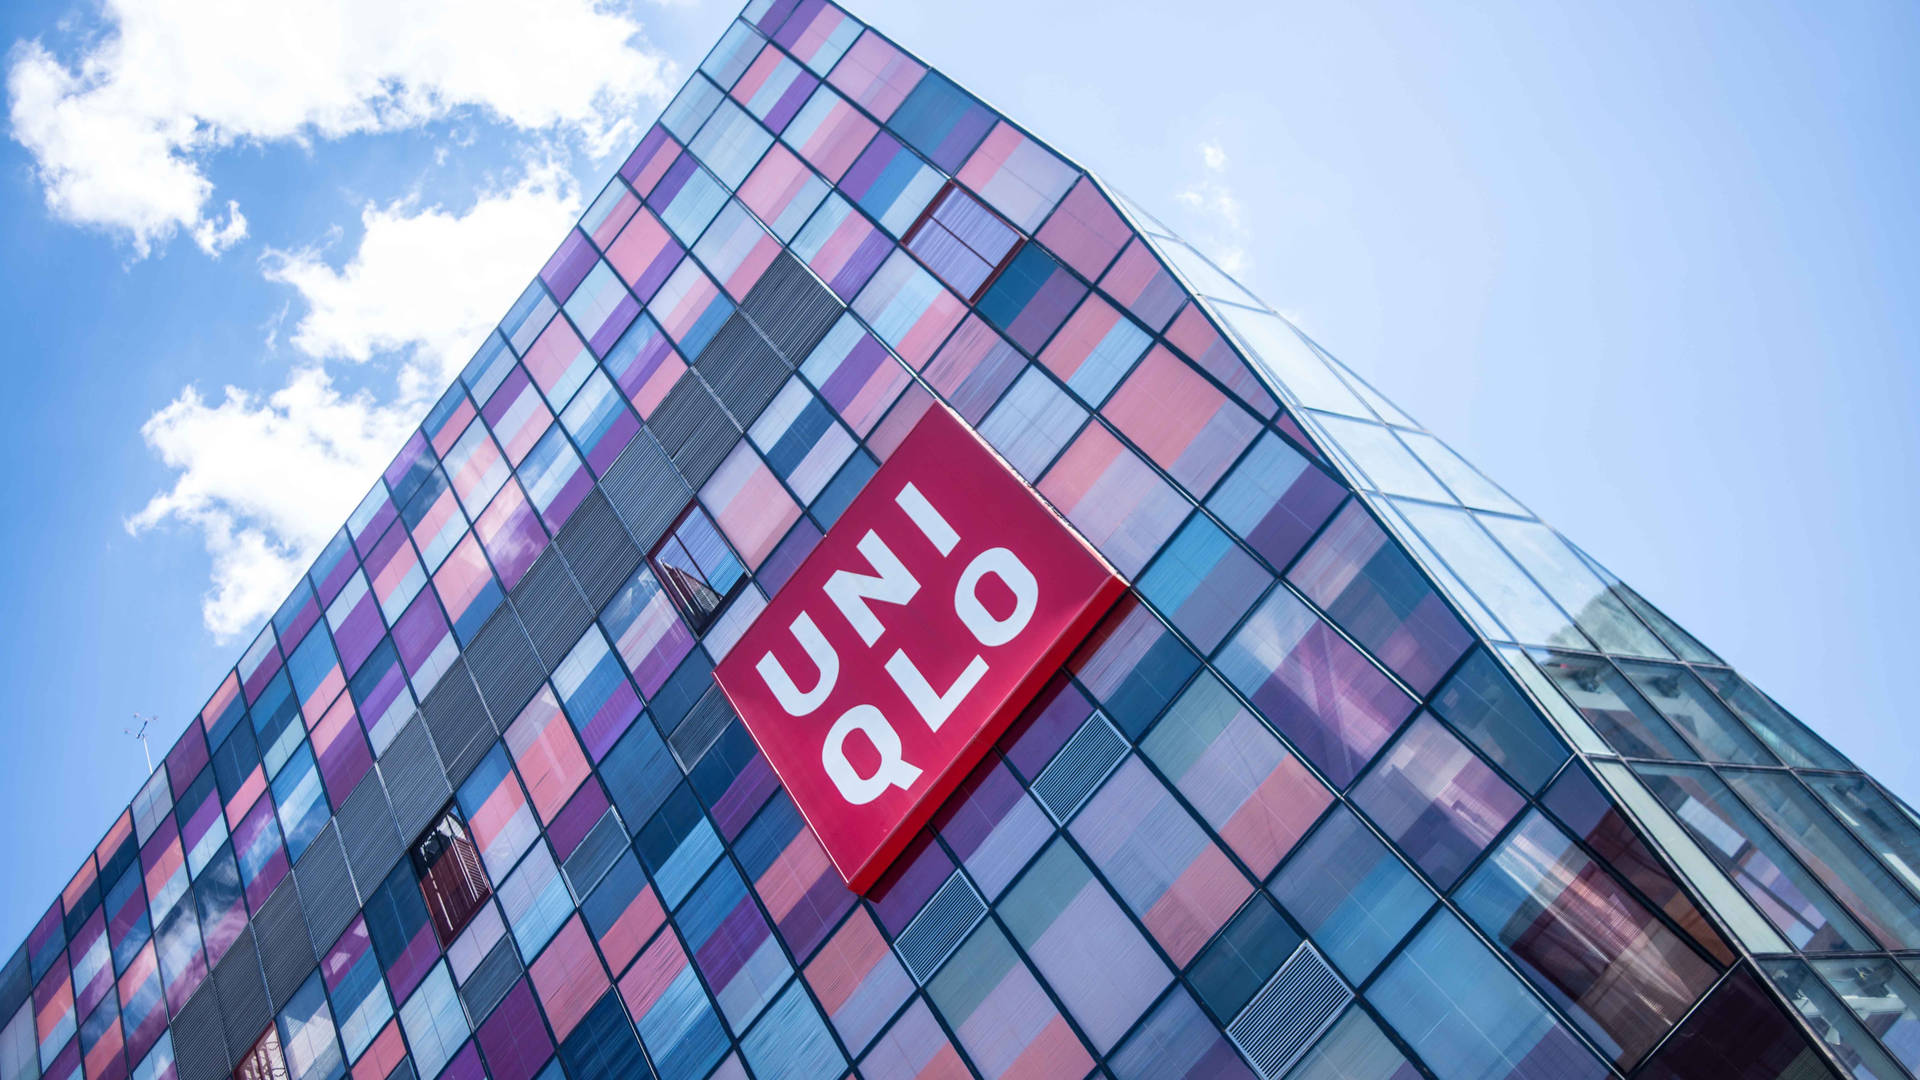 Uniqlo Colorful Glass Building Background